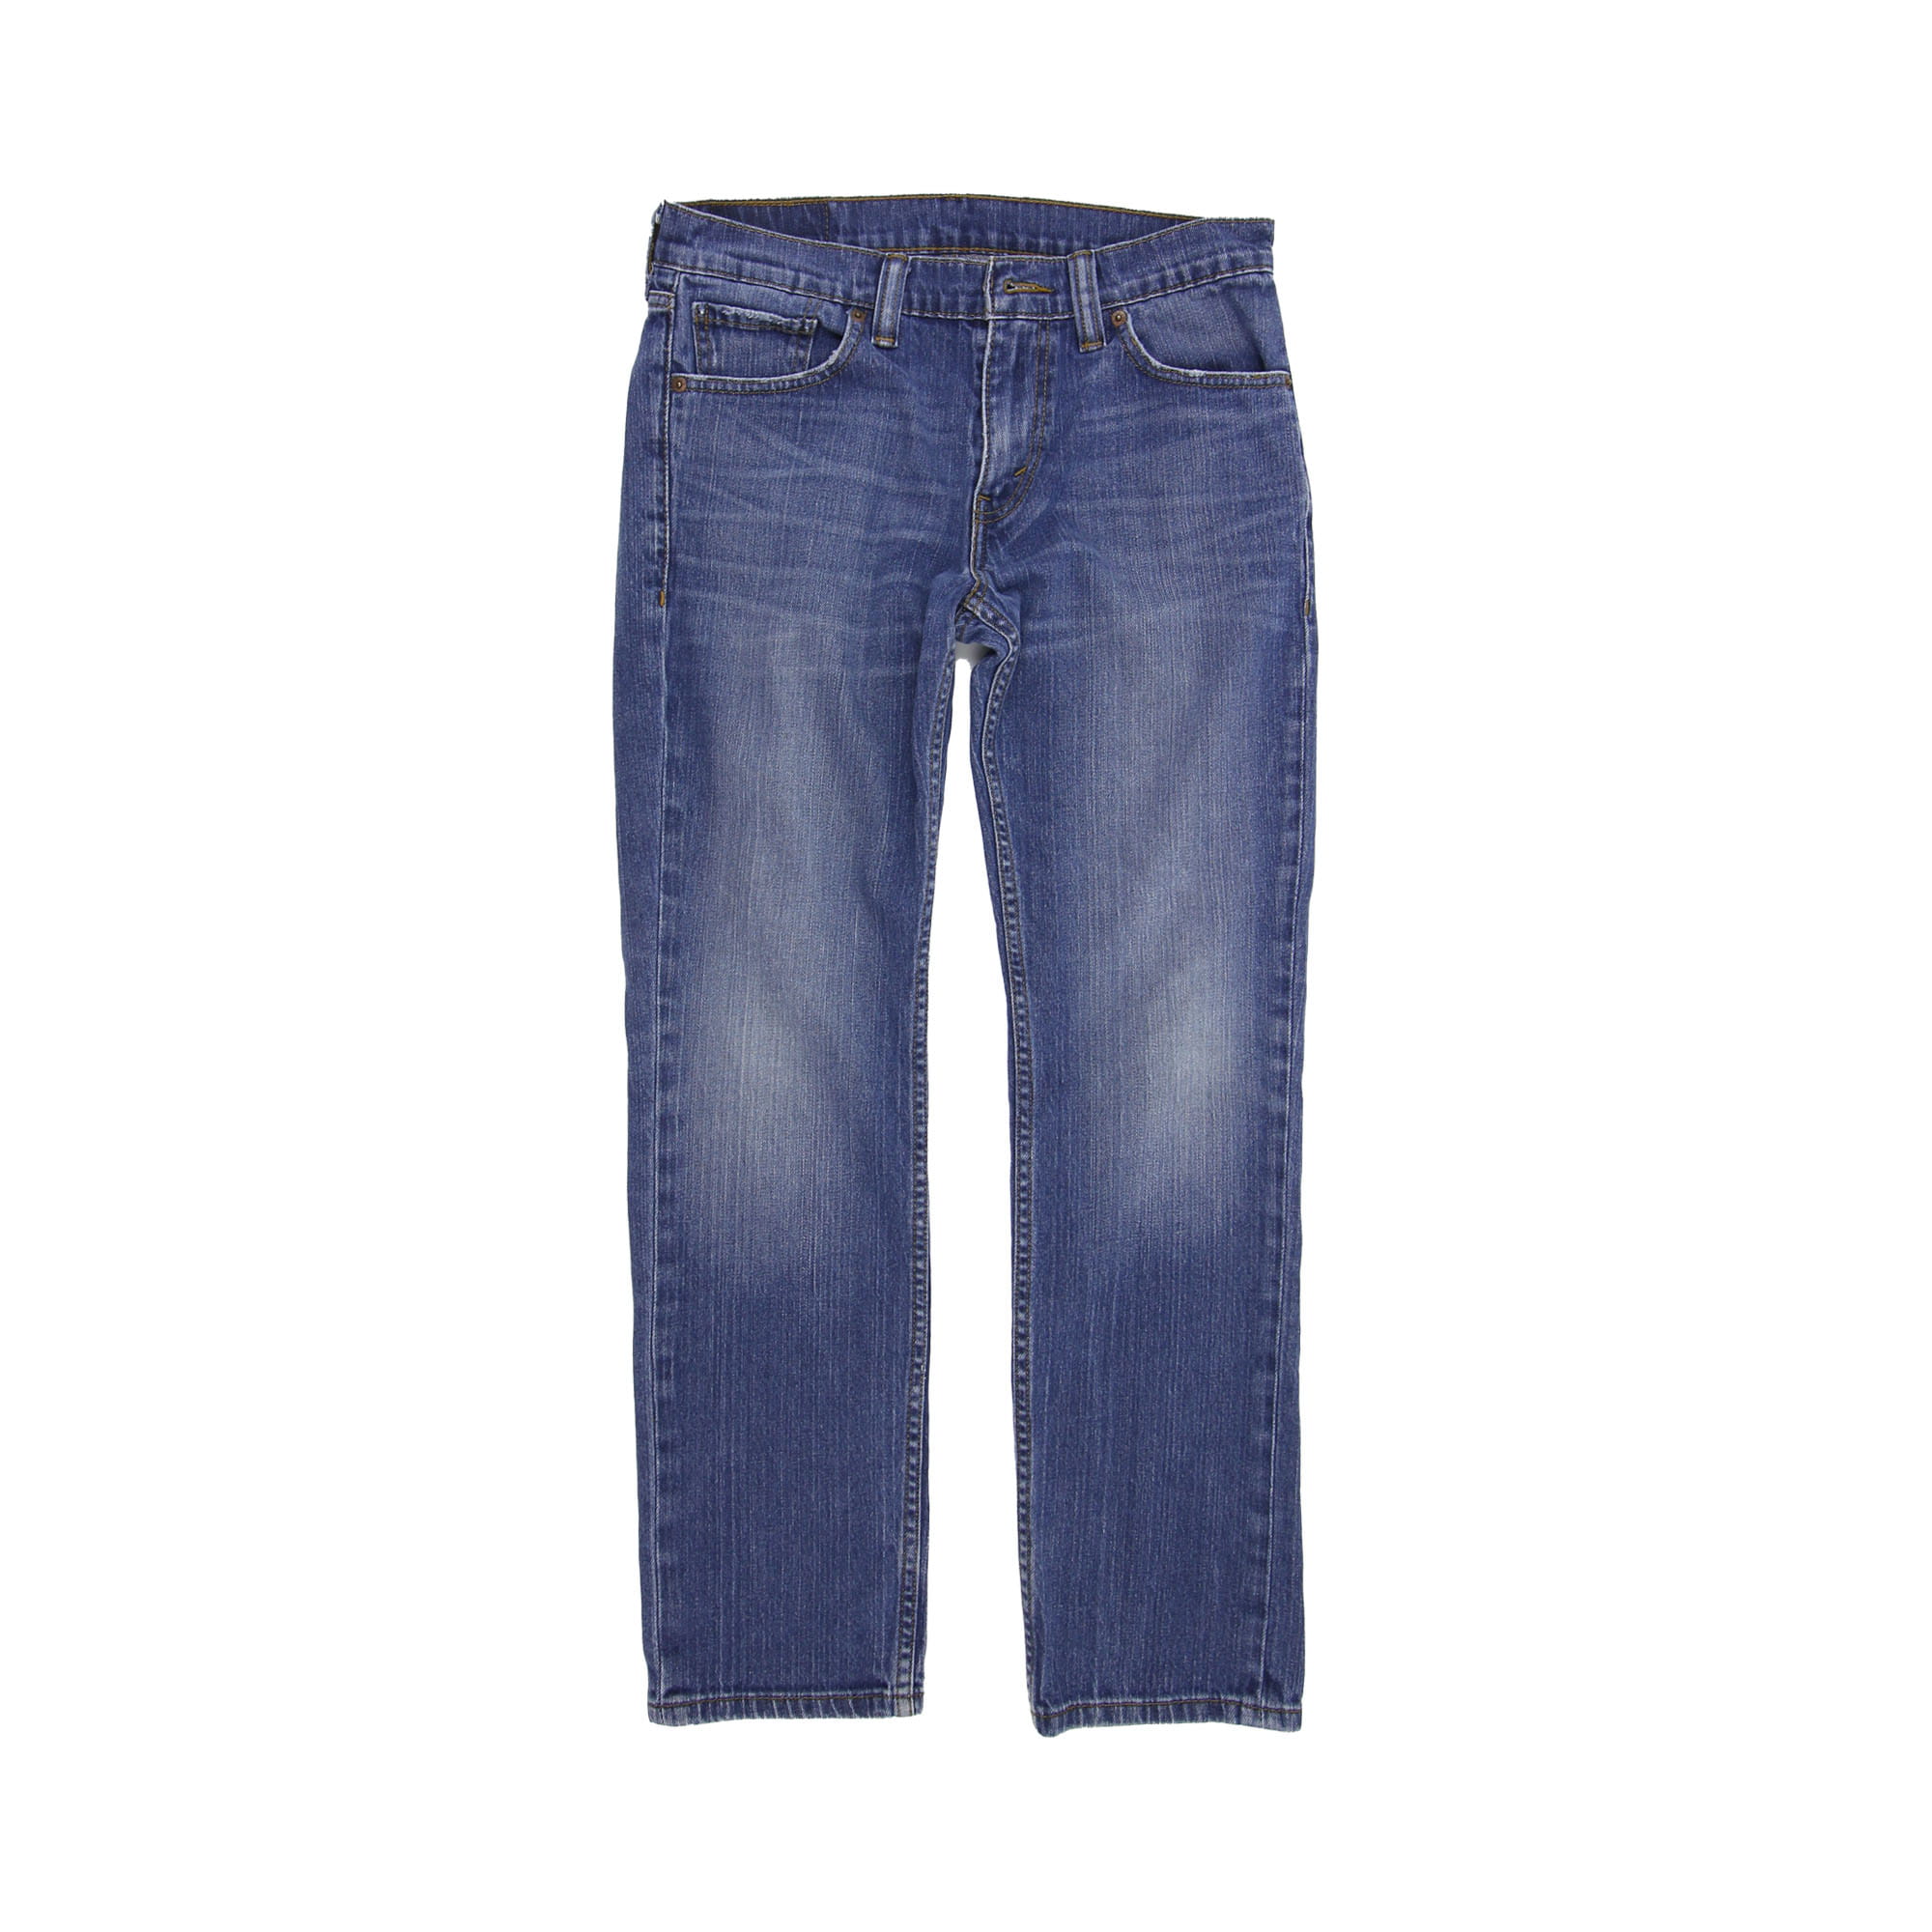 Levi's 511 Jeans  -   W30 L30